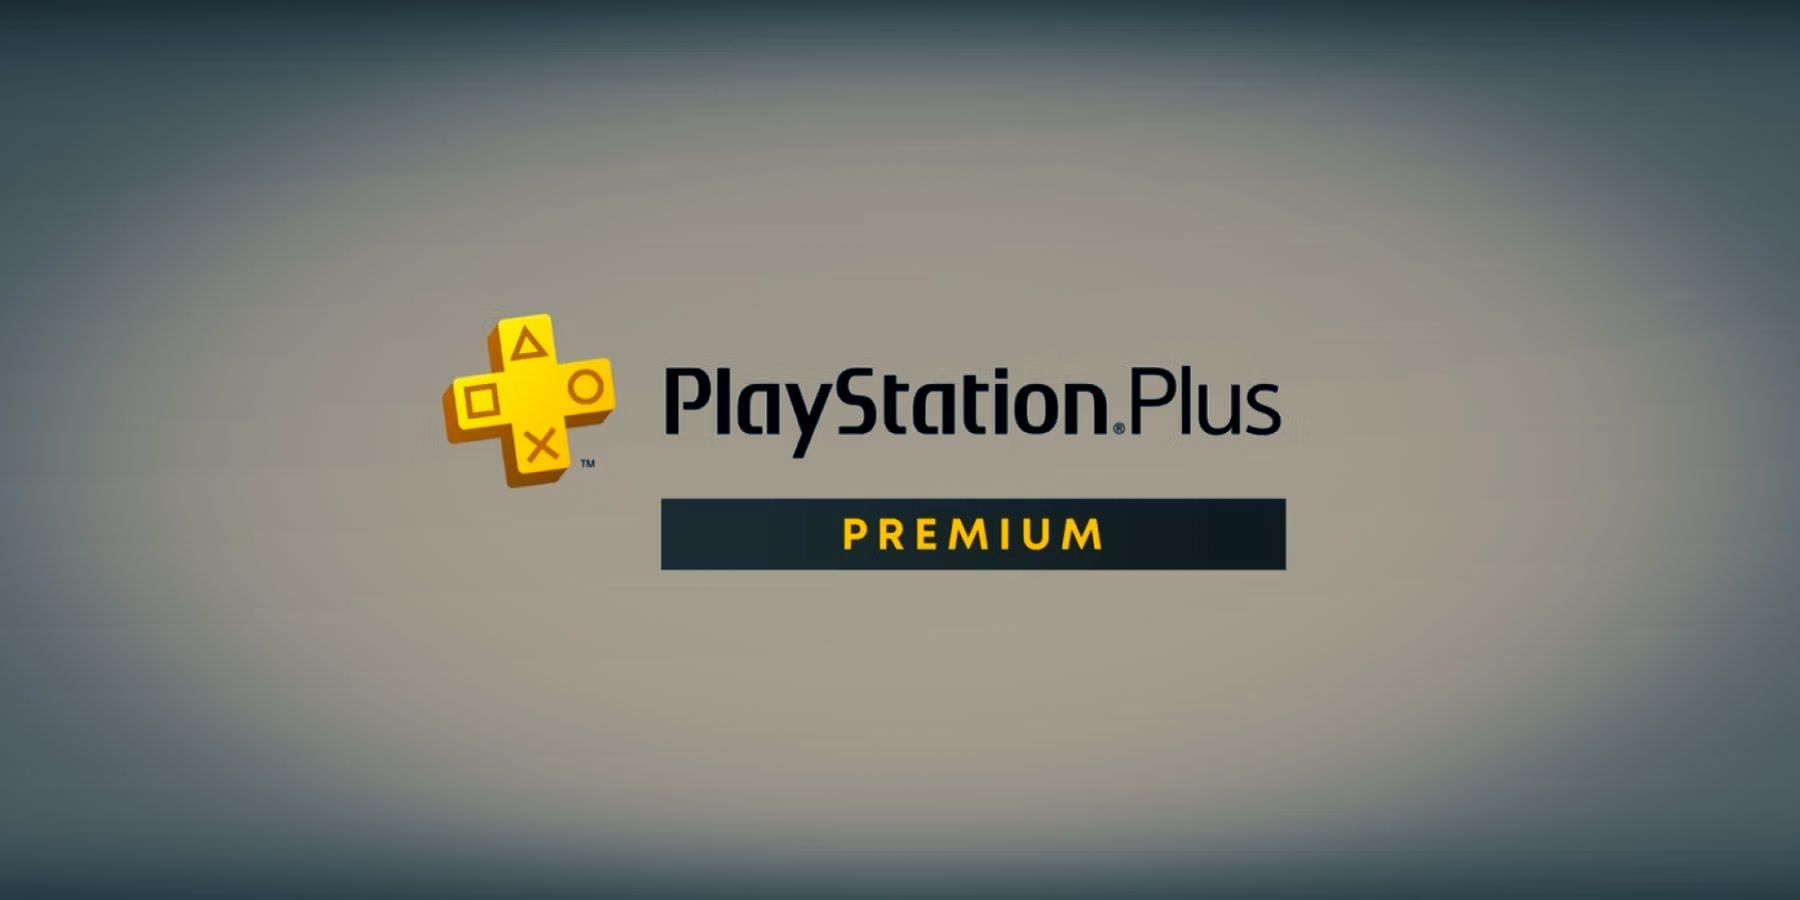 playstation plus premium logo twisted metal